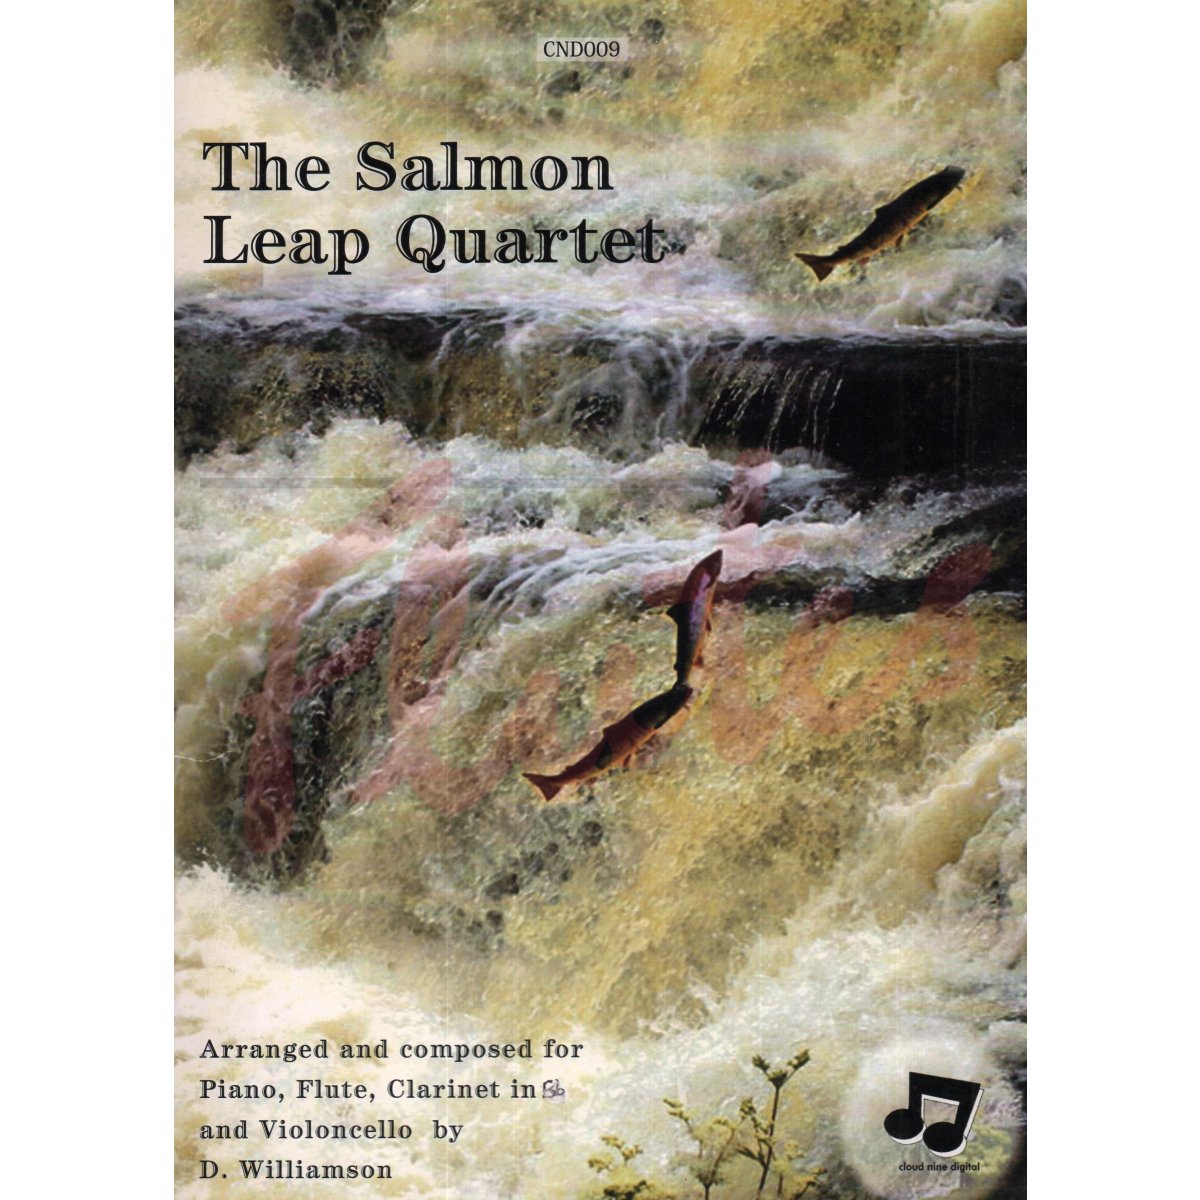 The Salmon Leap Quartet for Piano, Flute, Clarinet and Cello